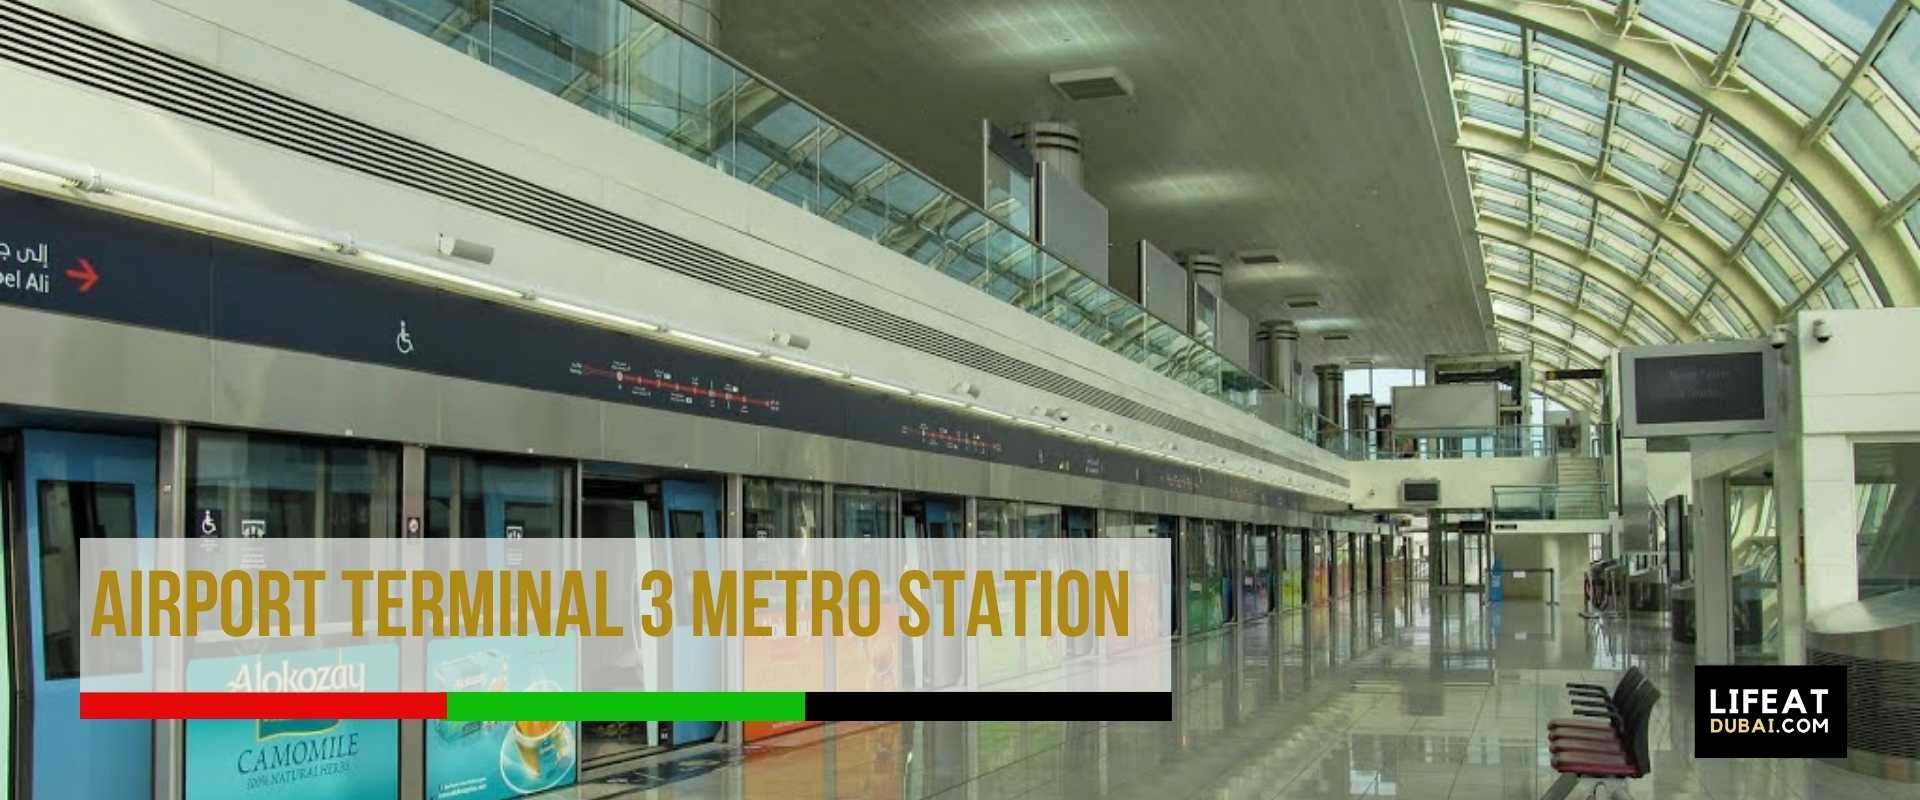 Airport Terminal 3 metro station